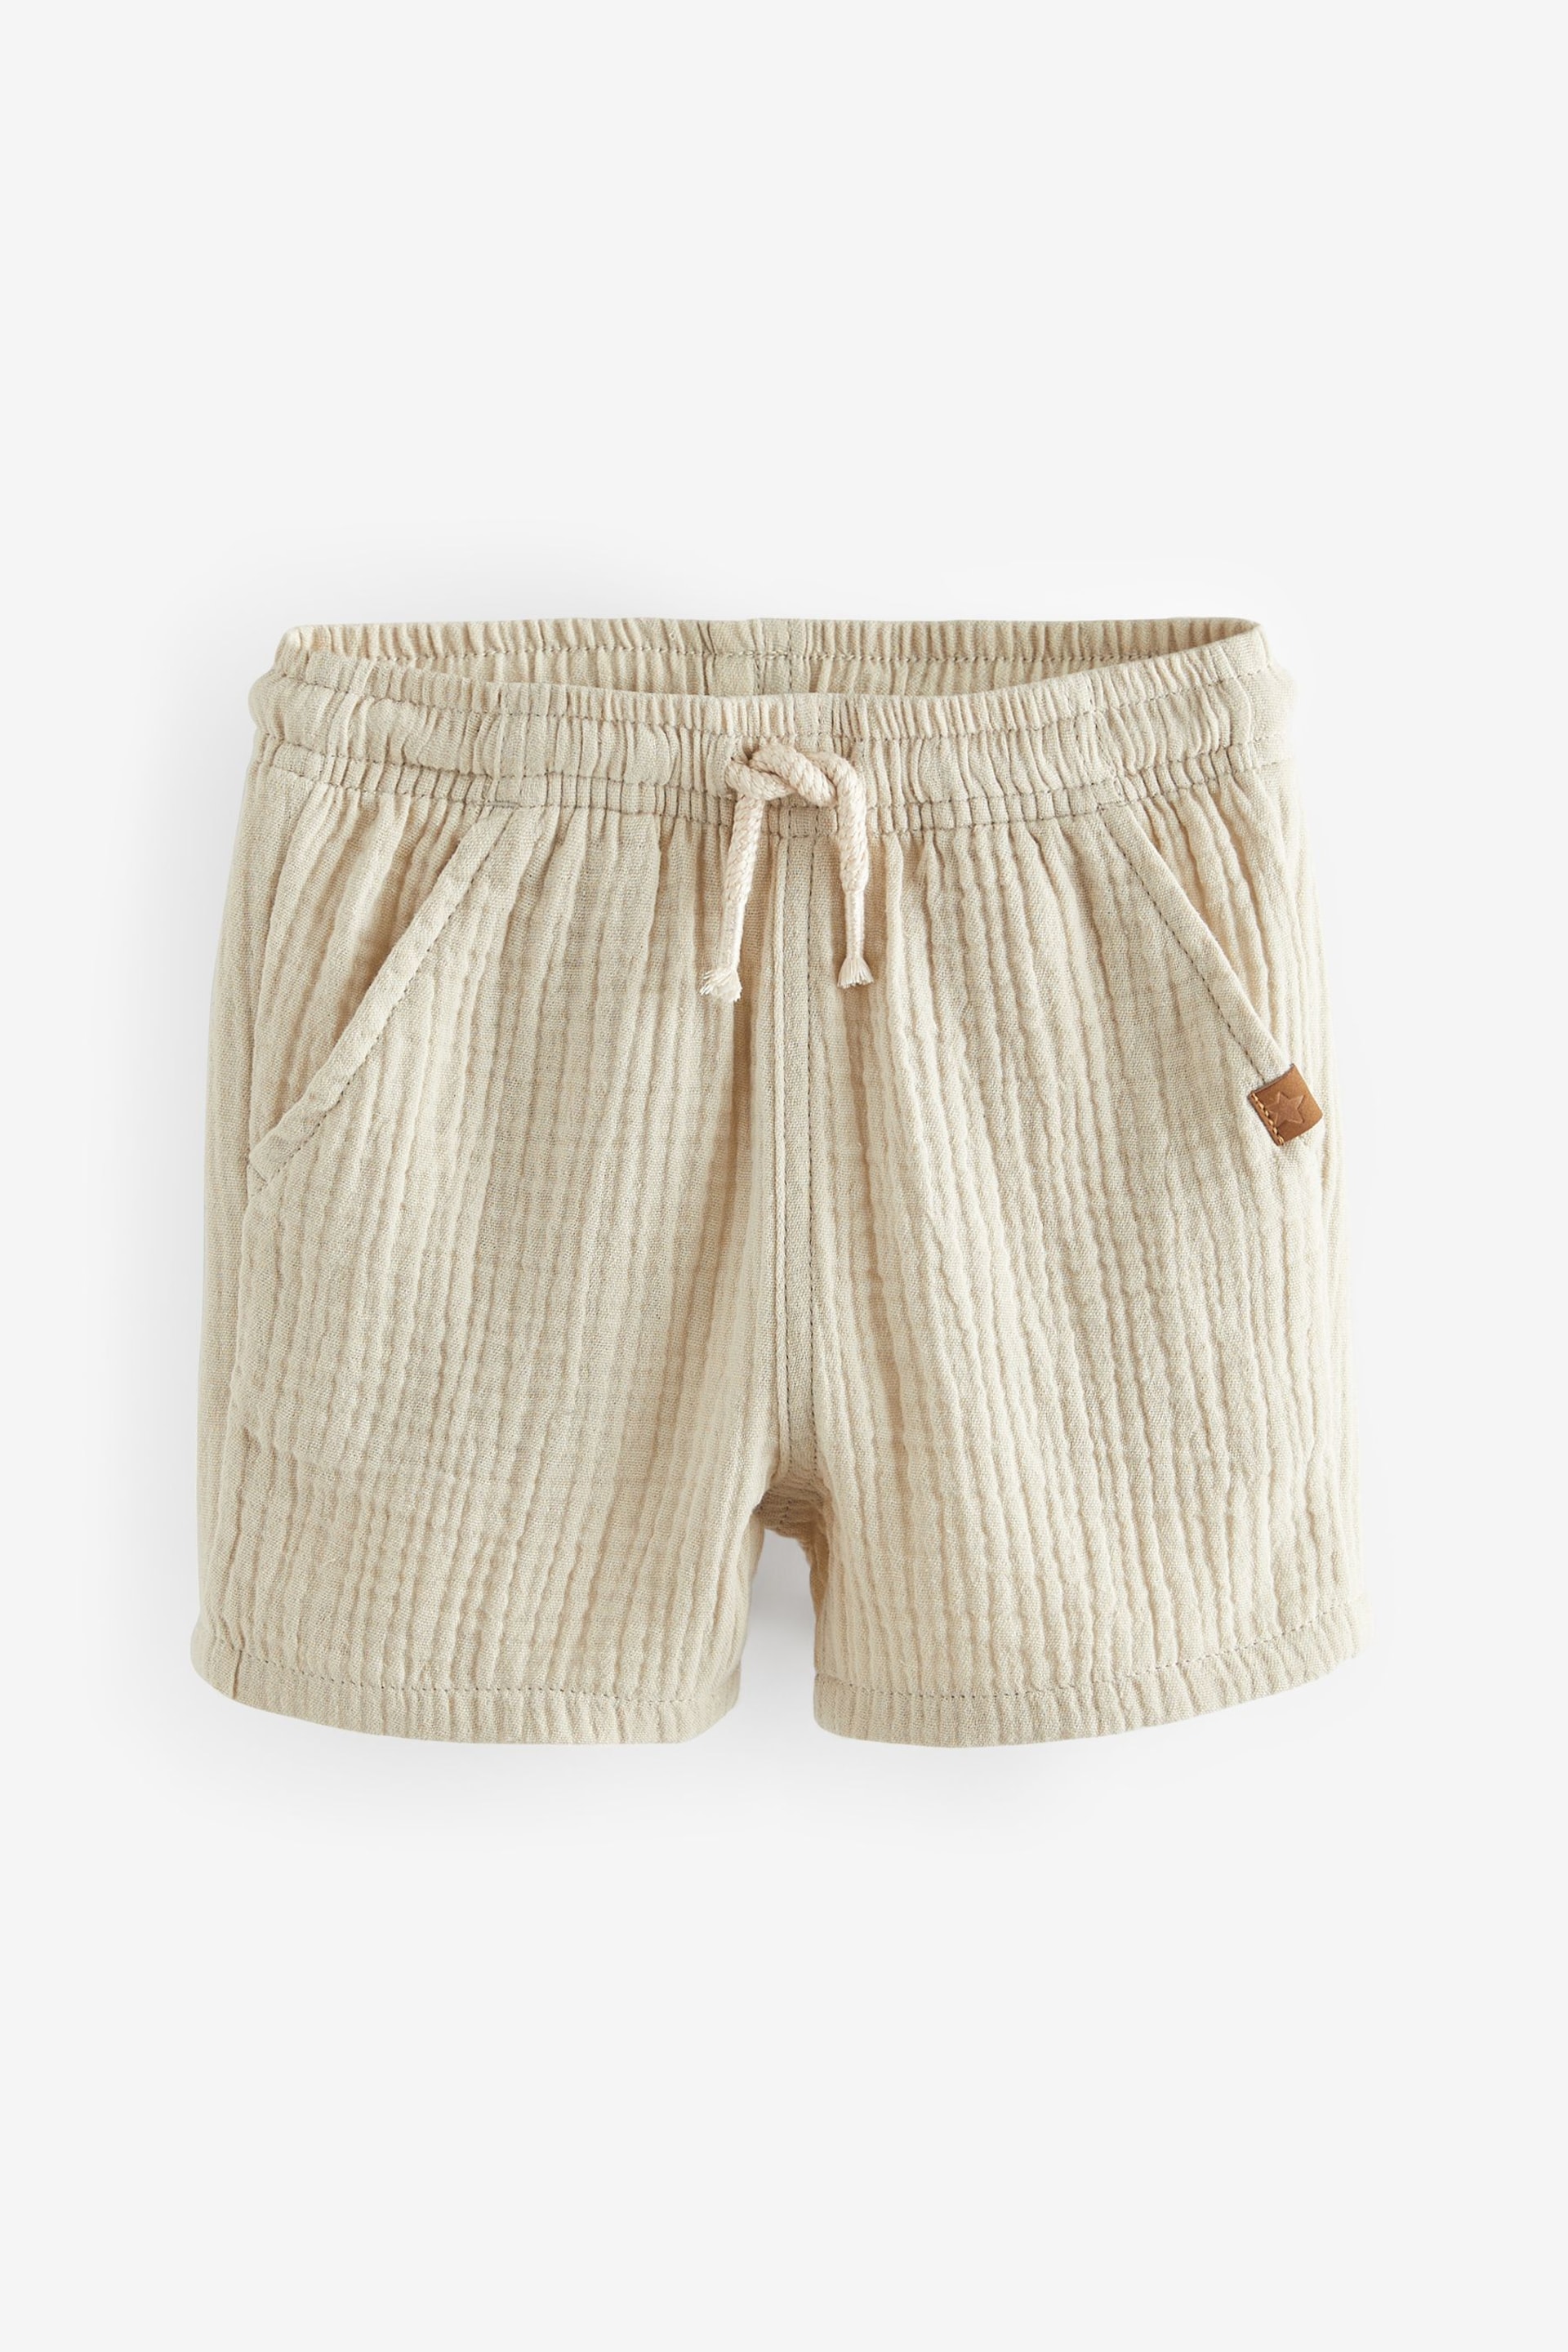 Ecru Cream Soft Textured Cotton Shorts (3mths-7yrs) - Image 3 of 5